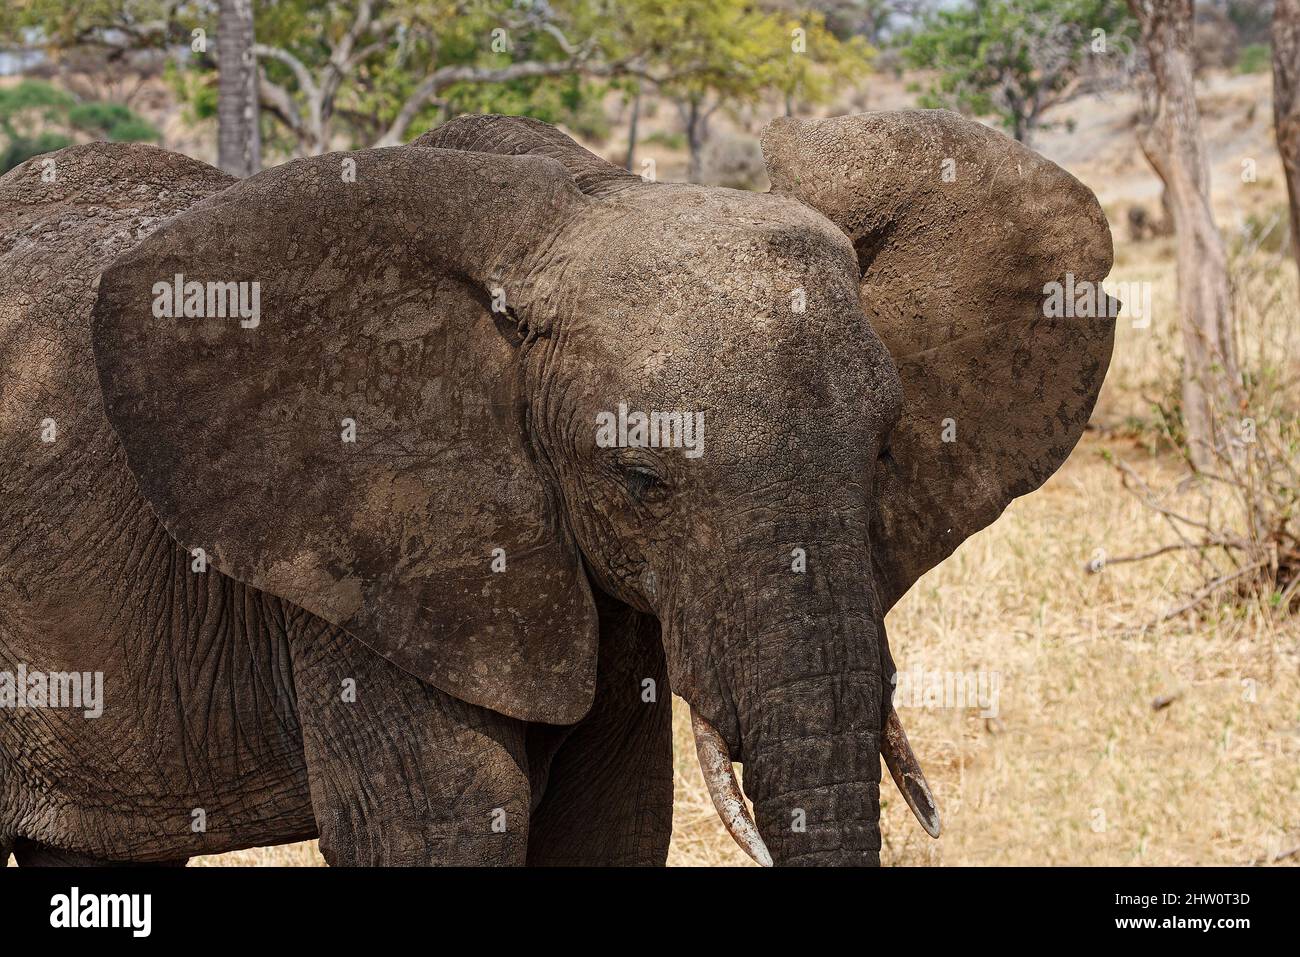 African elephant, close-up, Loxodanta africana, herbivores, largest land mammal, muscular trunk, tusks, large ears, texture, wildlife, animal, Tarangi Stock Photo